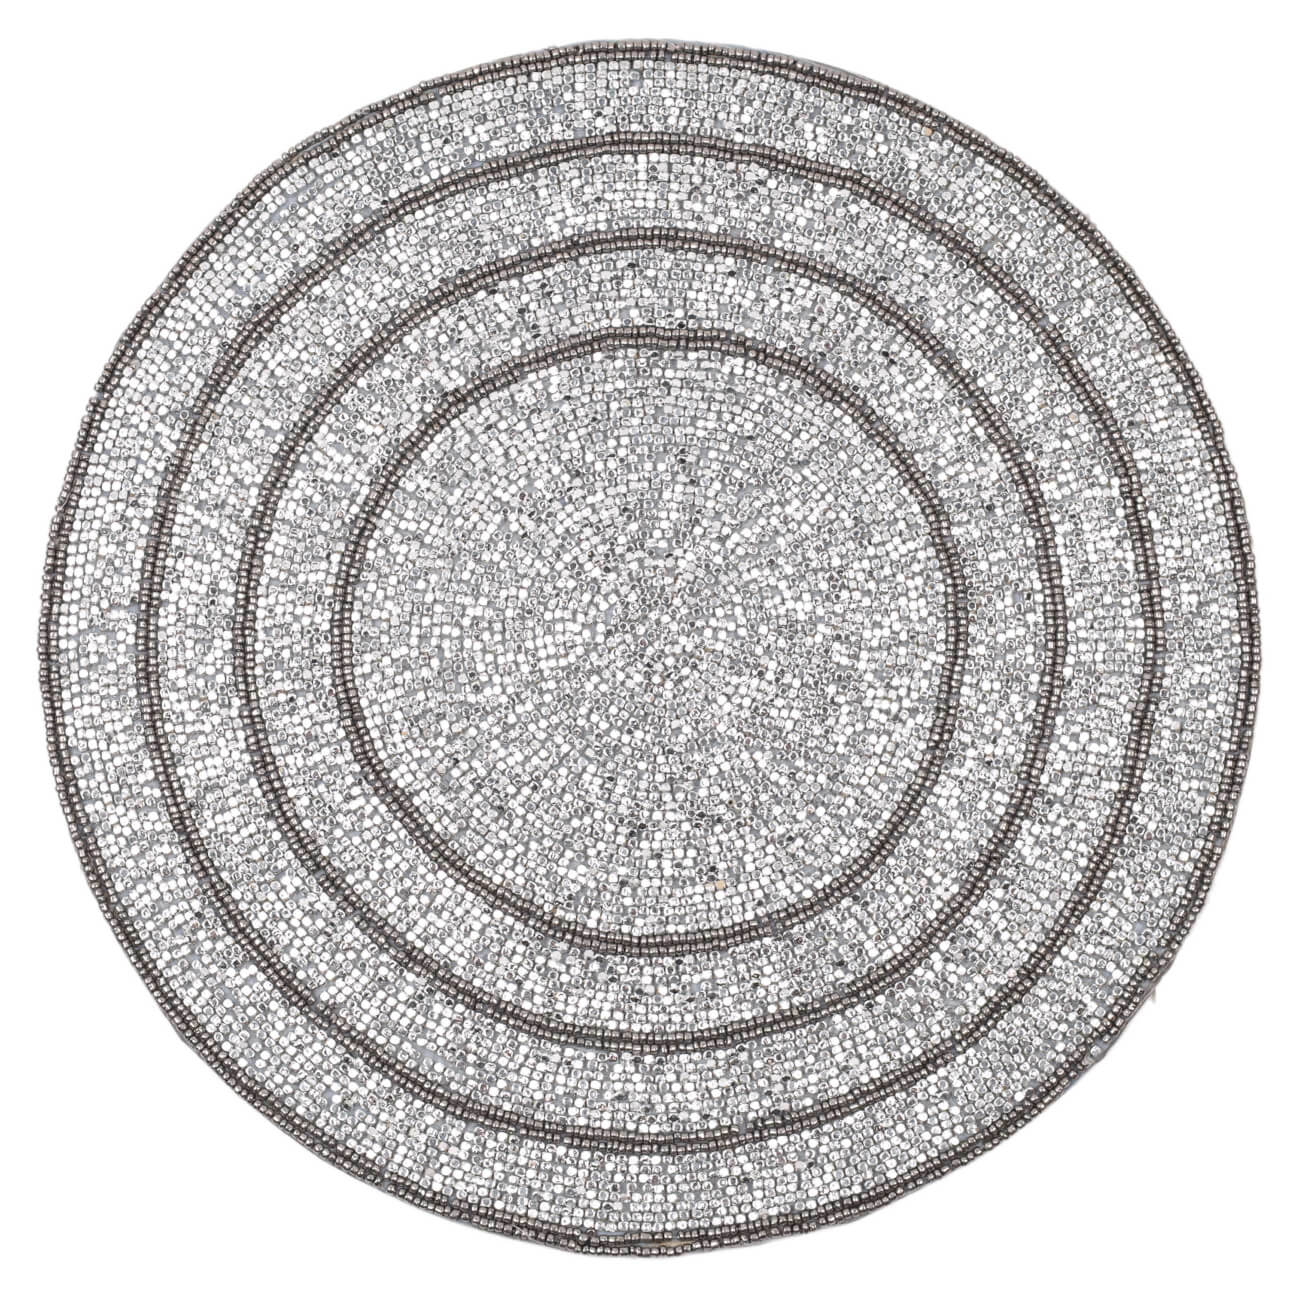 Салфетка под приборы, 36 см, бисер, круглая, серебристо-серая, Shiny stone салфетка под приборы 38 см пвх круглая белая azhur grid